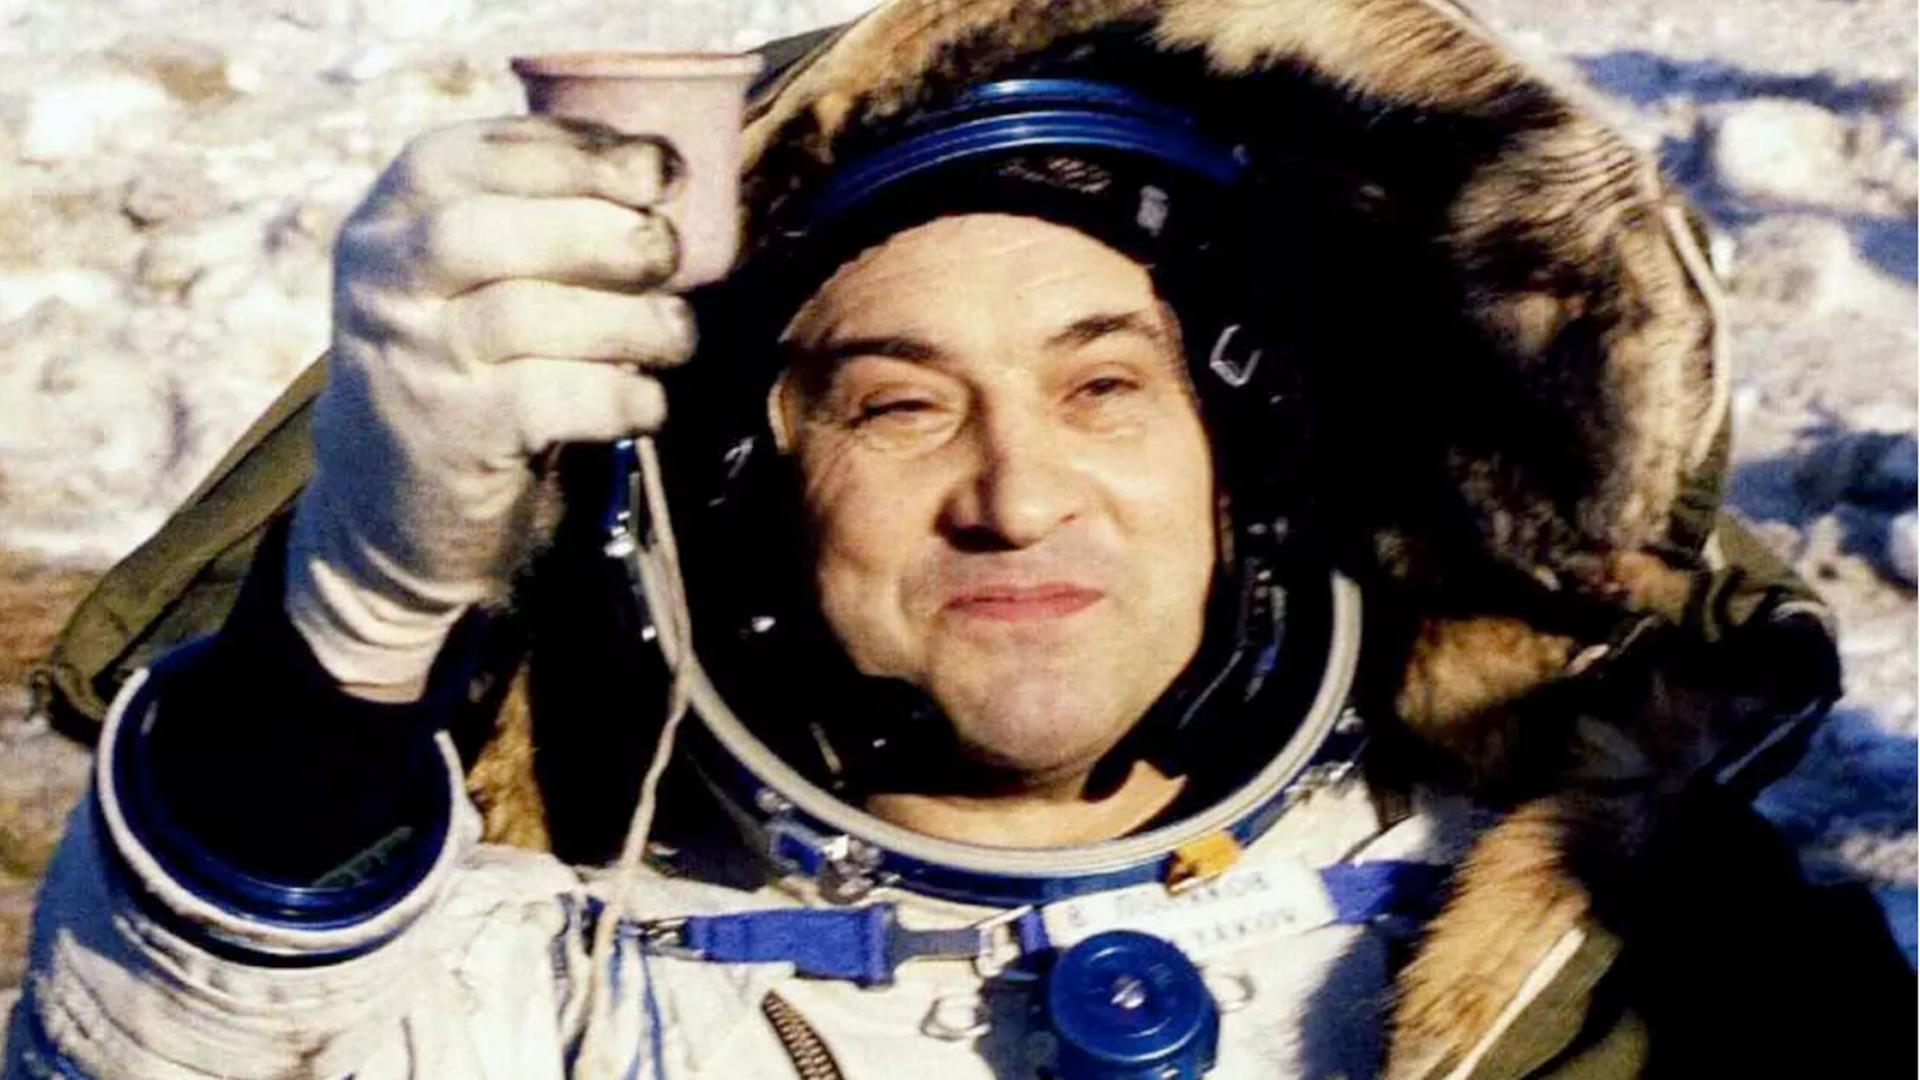 Rekordkosmonaut Poljakow - Trauer um den Marsflug-Astronauten